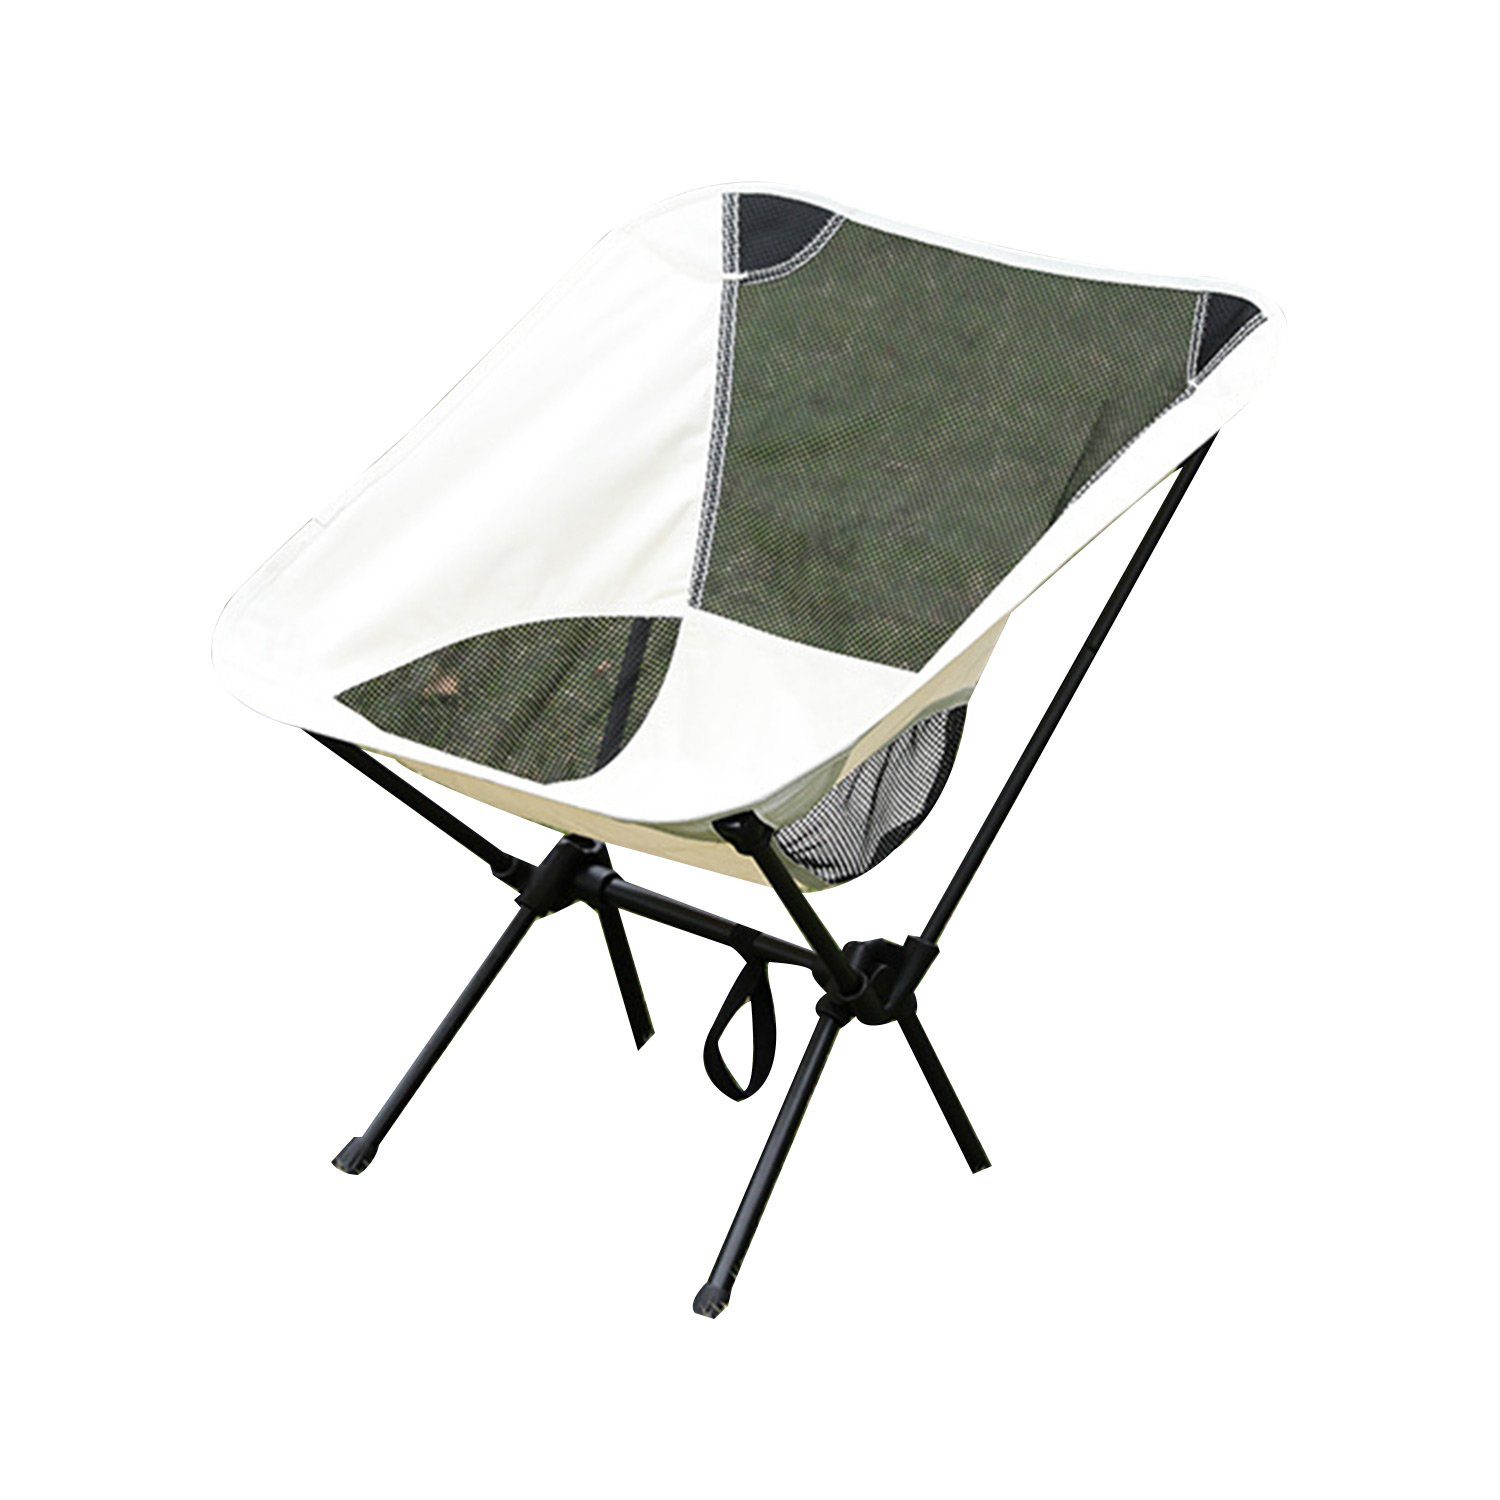 MAGICSHE Klappstuhl Camping Stuhl, ultra leichter Stuhl im Freien, Reise Stuhl, Faltbar, Tragfähigkeit 120 kg, Picknick, Outdoor weiß